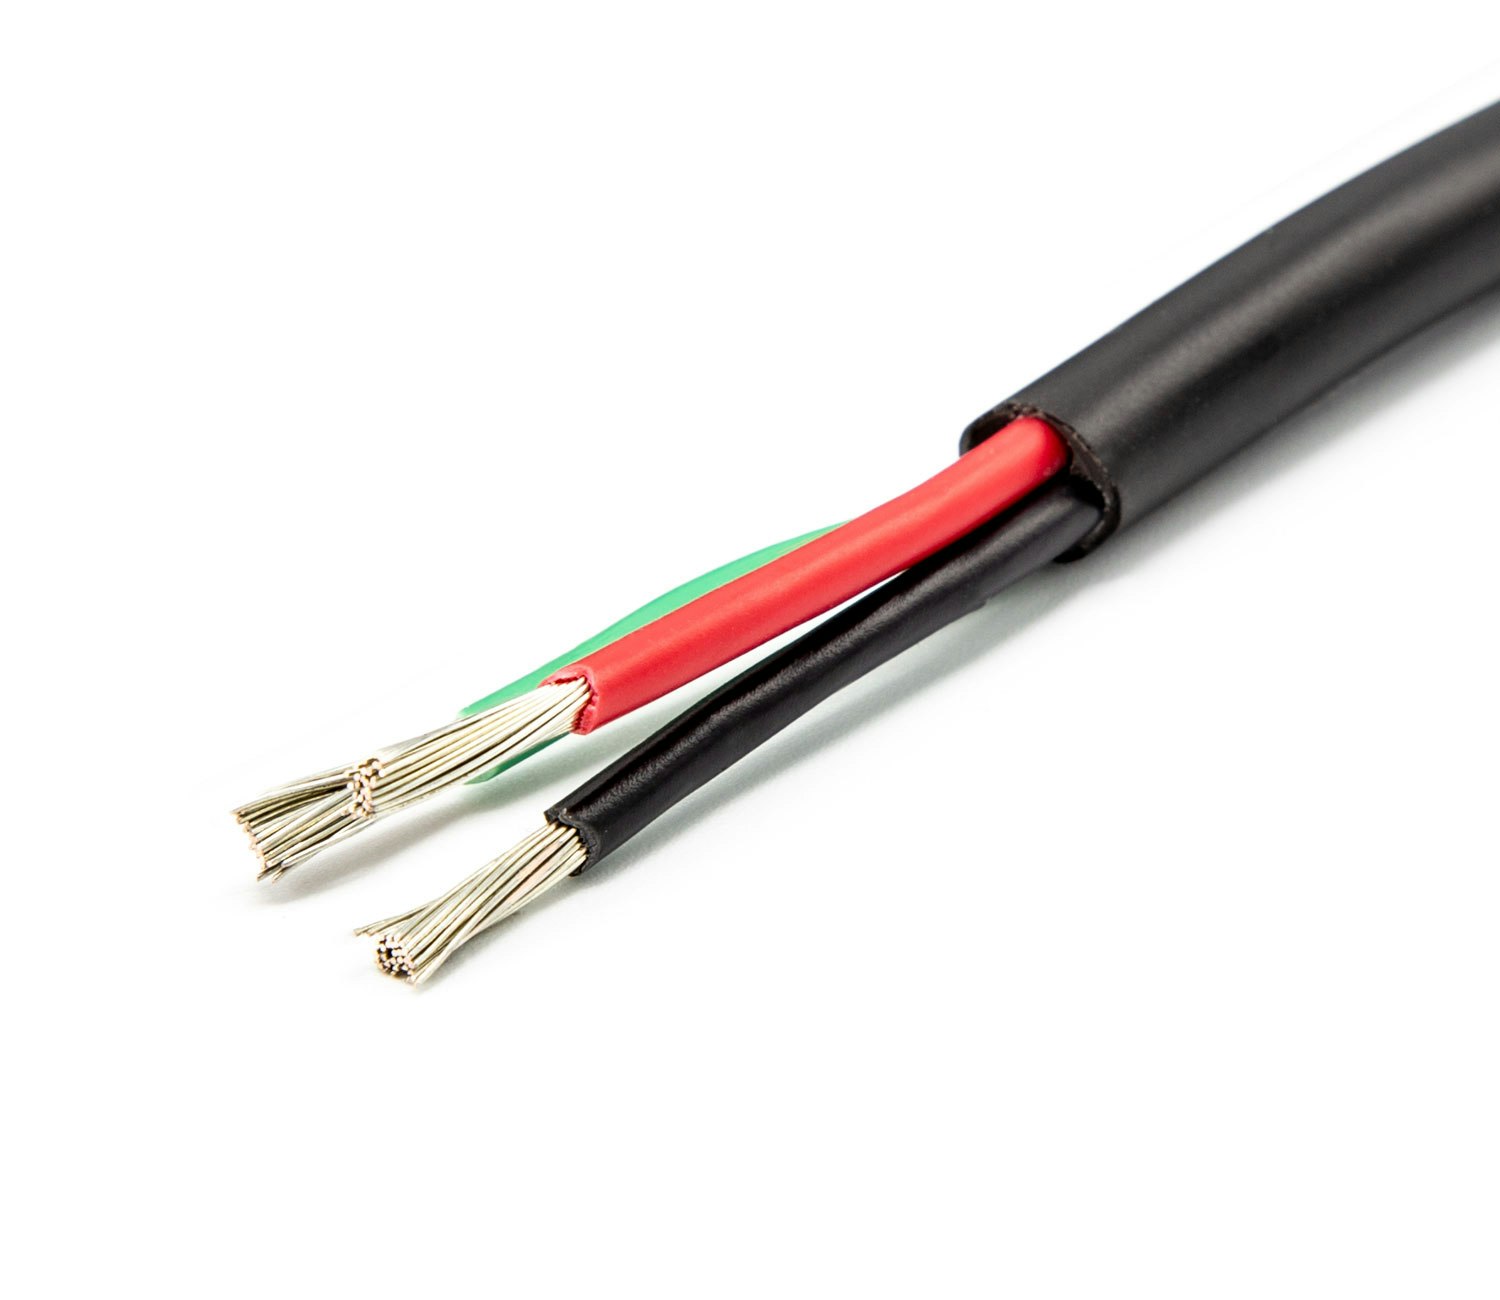  OCEANFLEX - Fortinnet elektrisk kabel flertråds 2x1,5mm2 rund, 30m